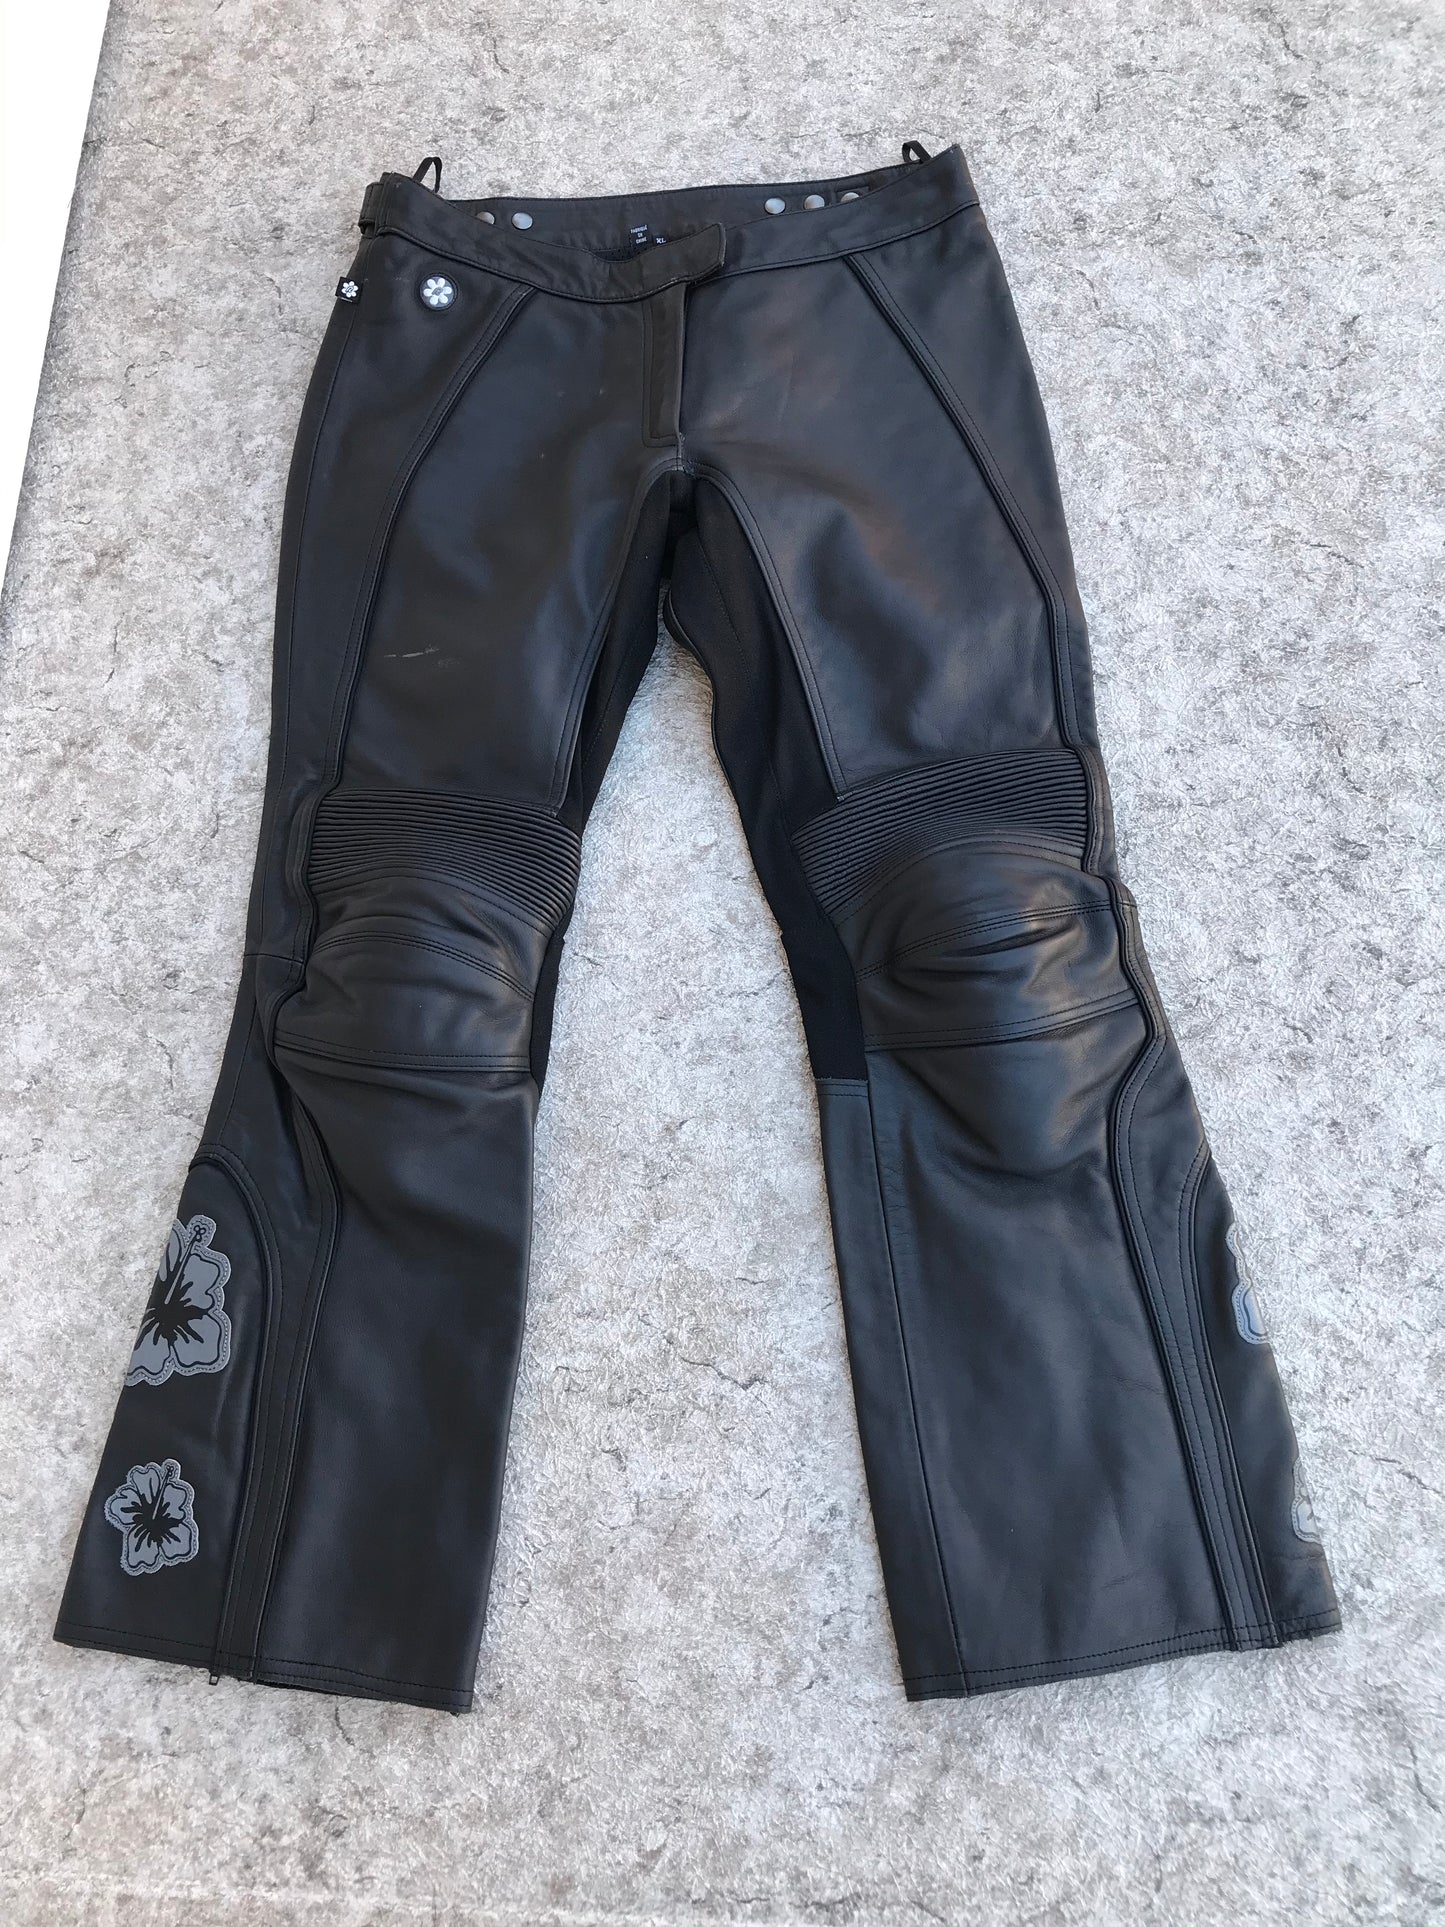 Motorcycle Pants Ladies Size 10 Joe Rocket Black Leather Armored  As New